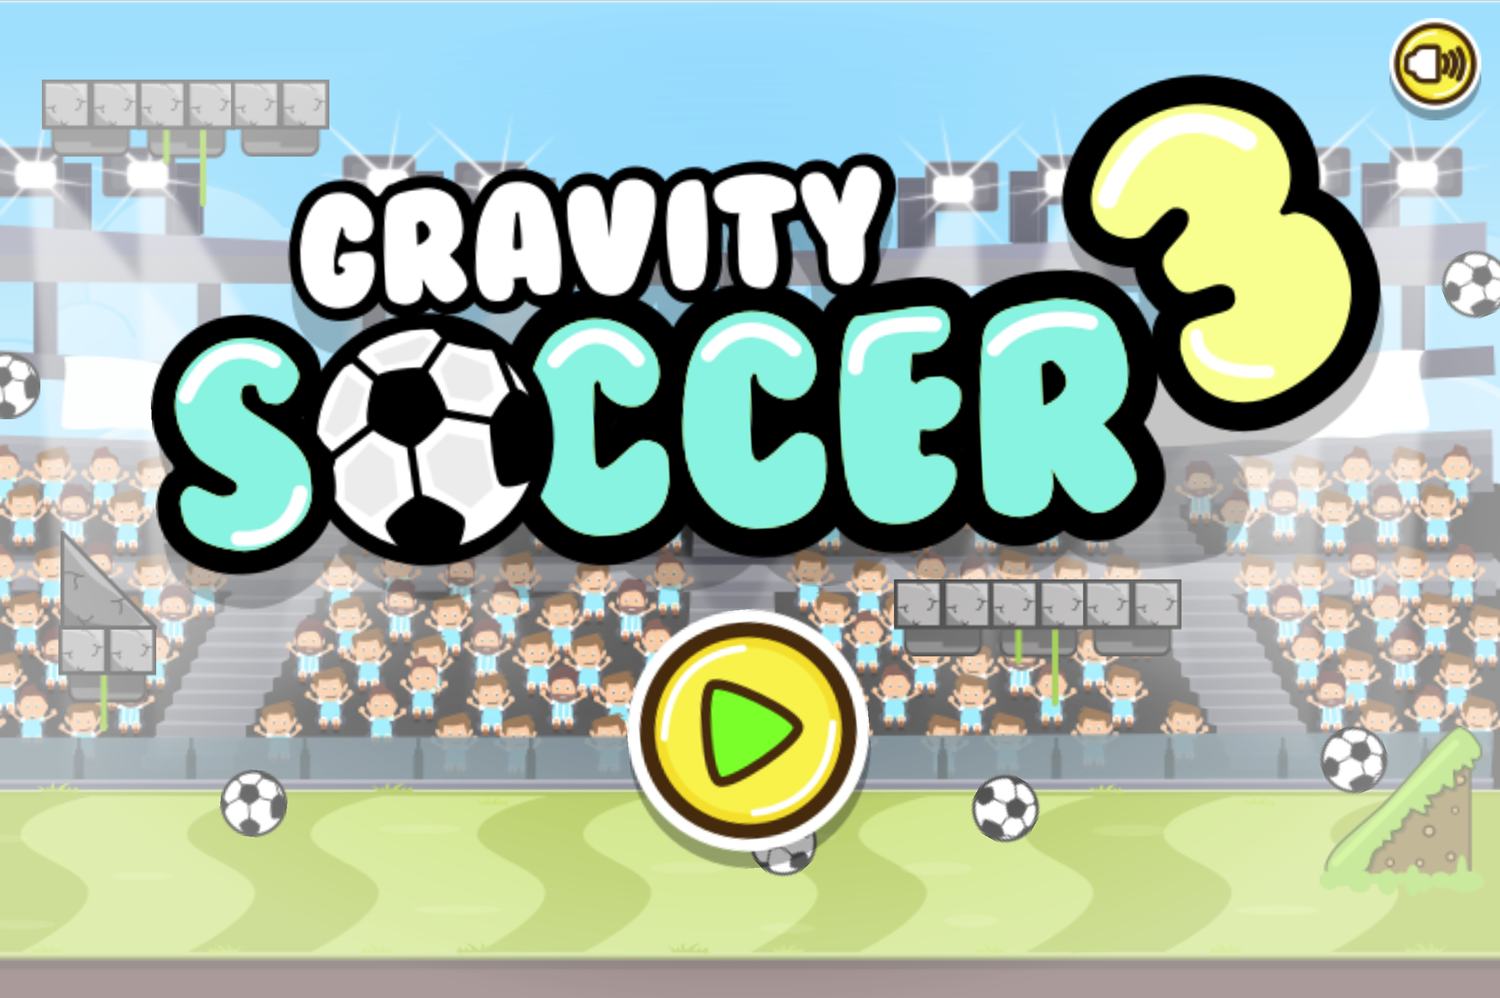 Gravity Soccer 3 Game Welcome Screen Screenshot.